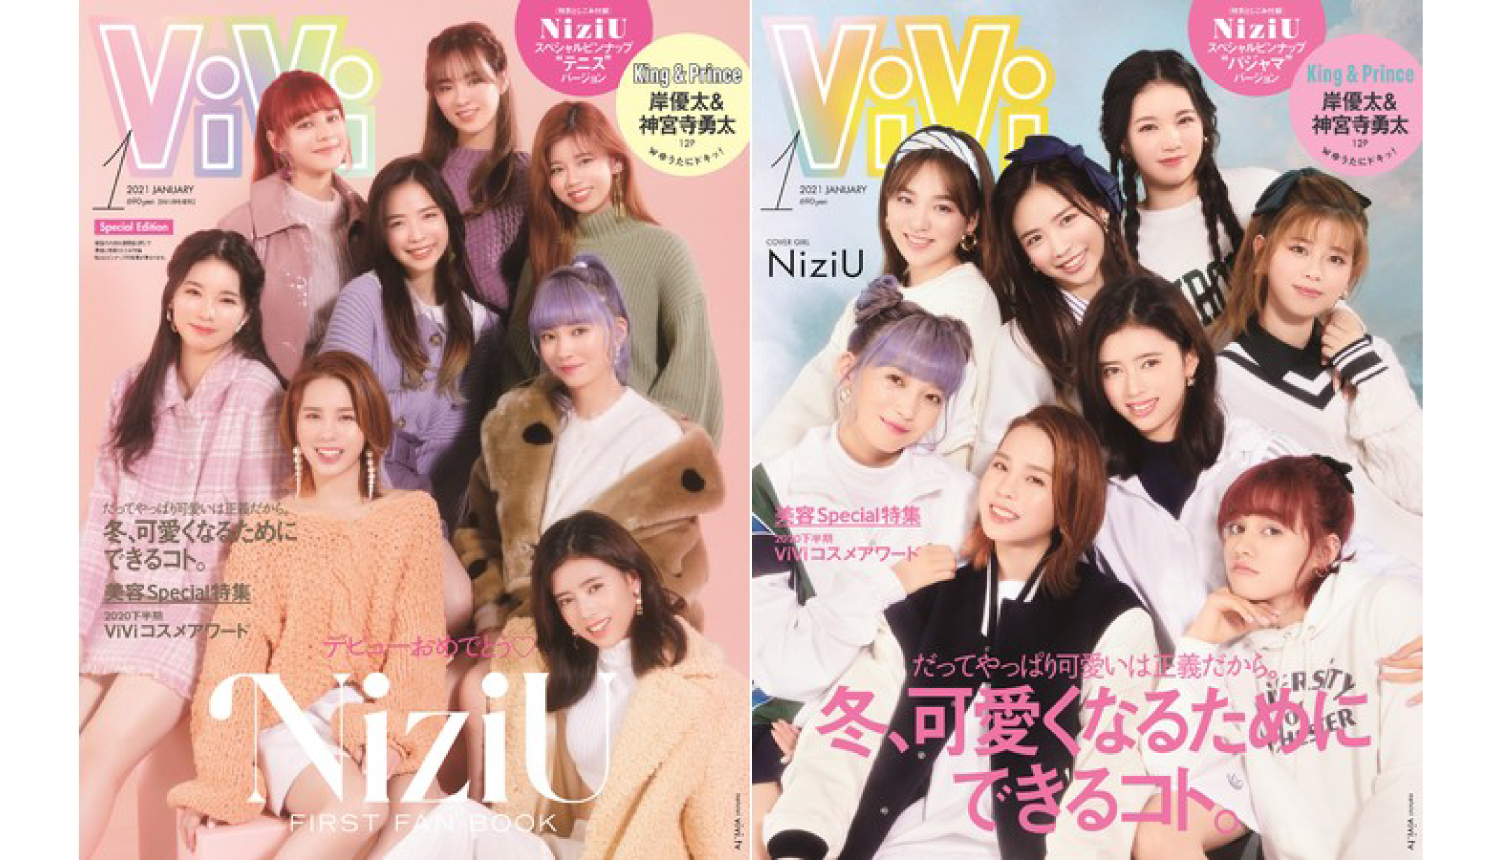 Niziuがパジャマ姿を初披露 Vivi史上初の2パターン表紙で登場 Moshi Moshi Nippon もしもしにっぽん